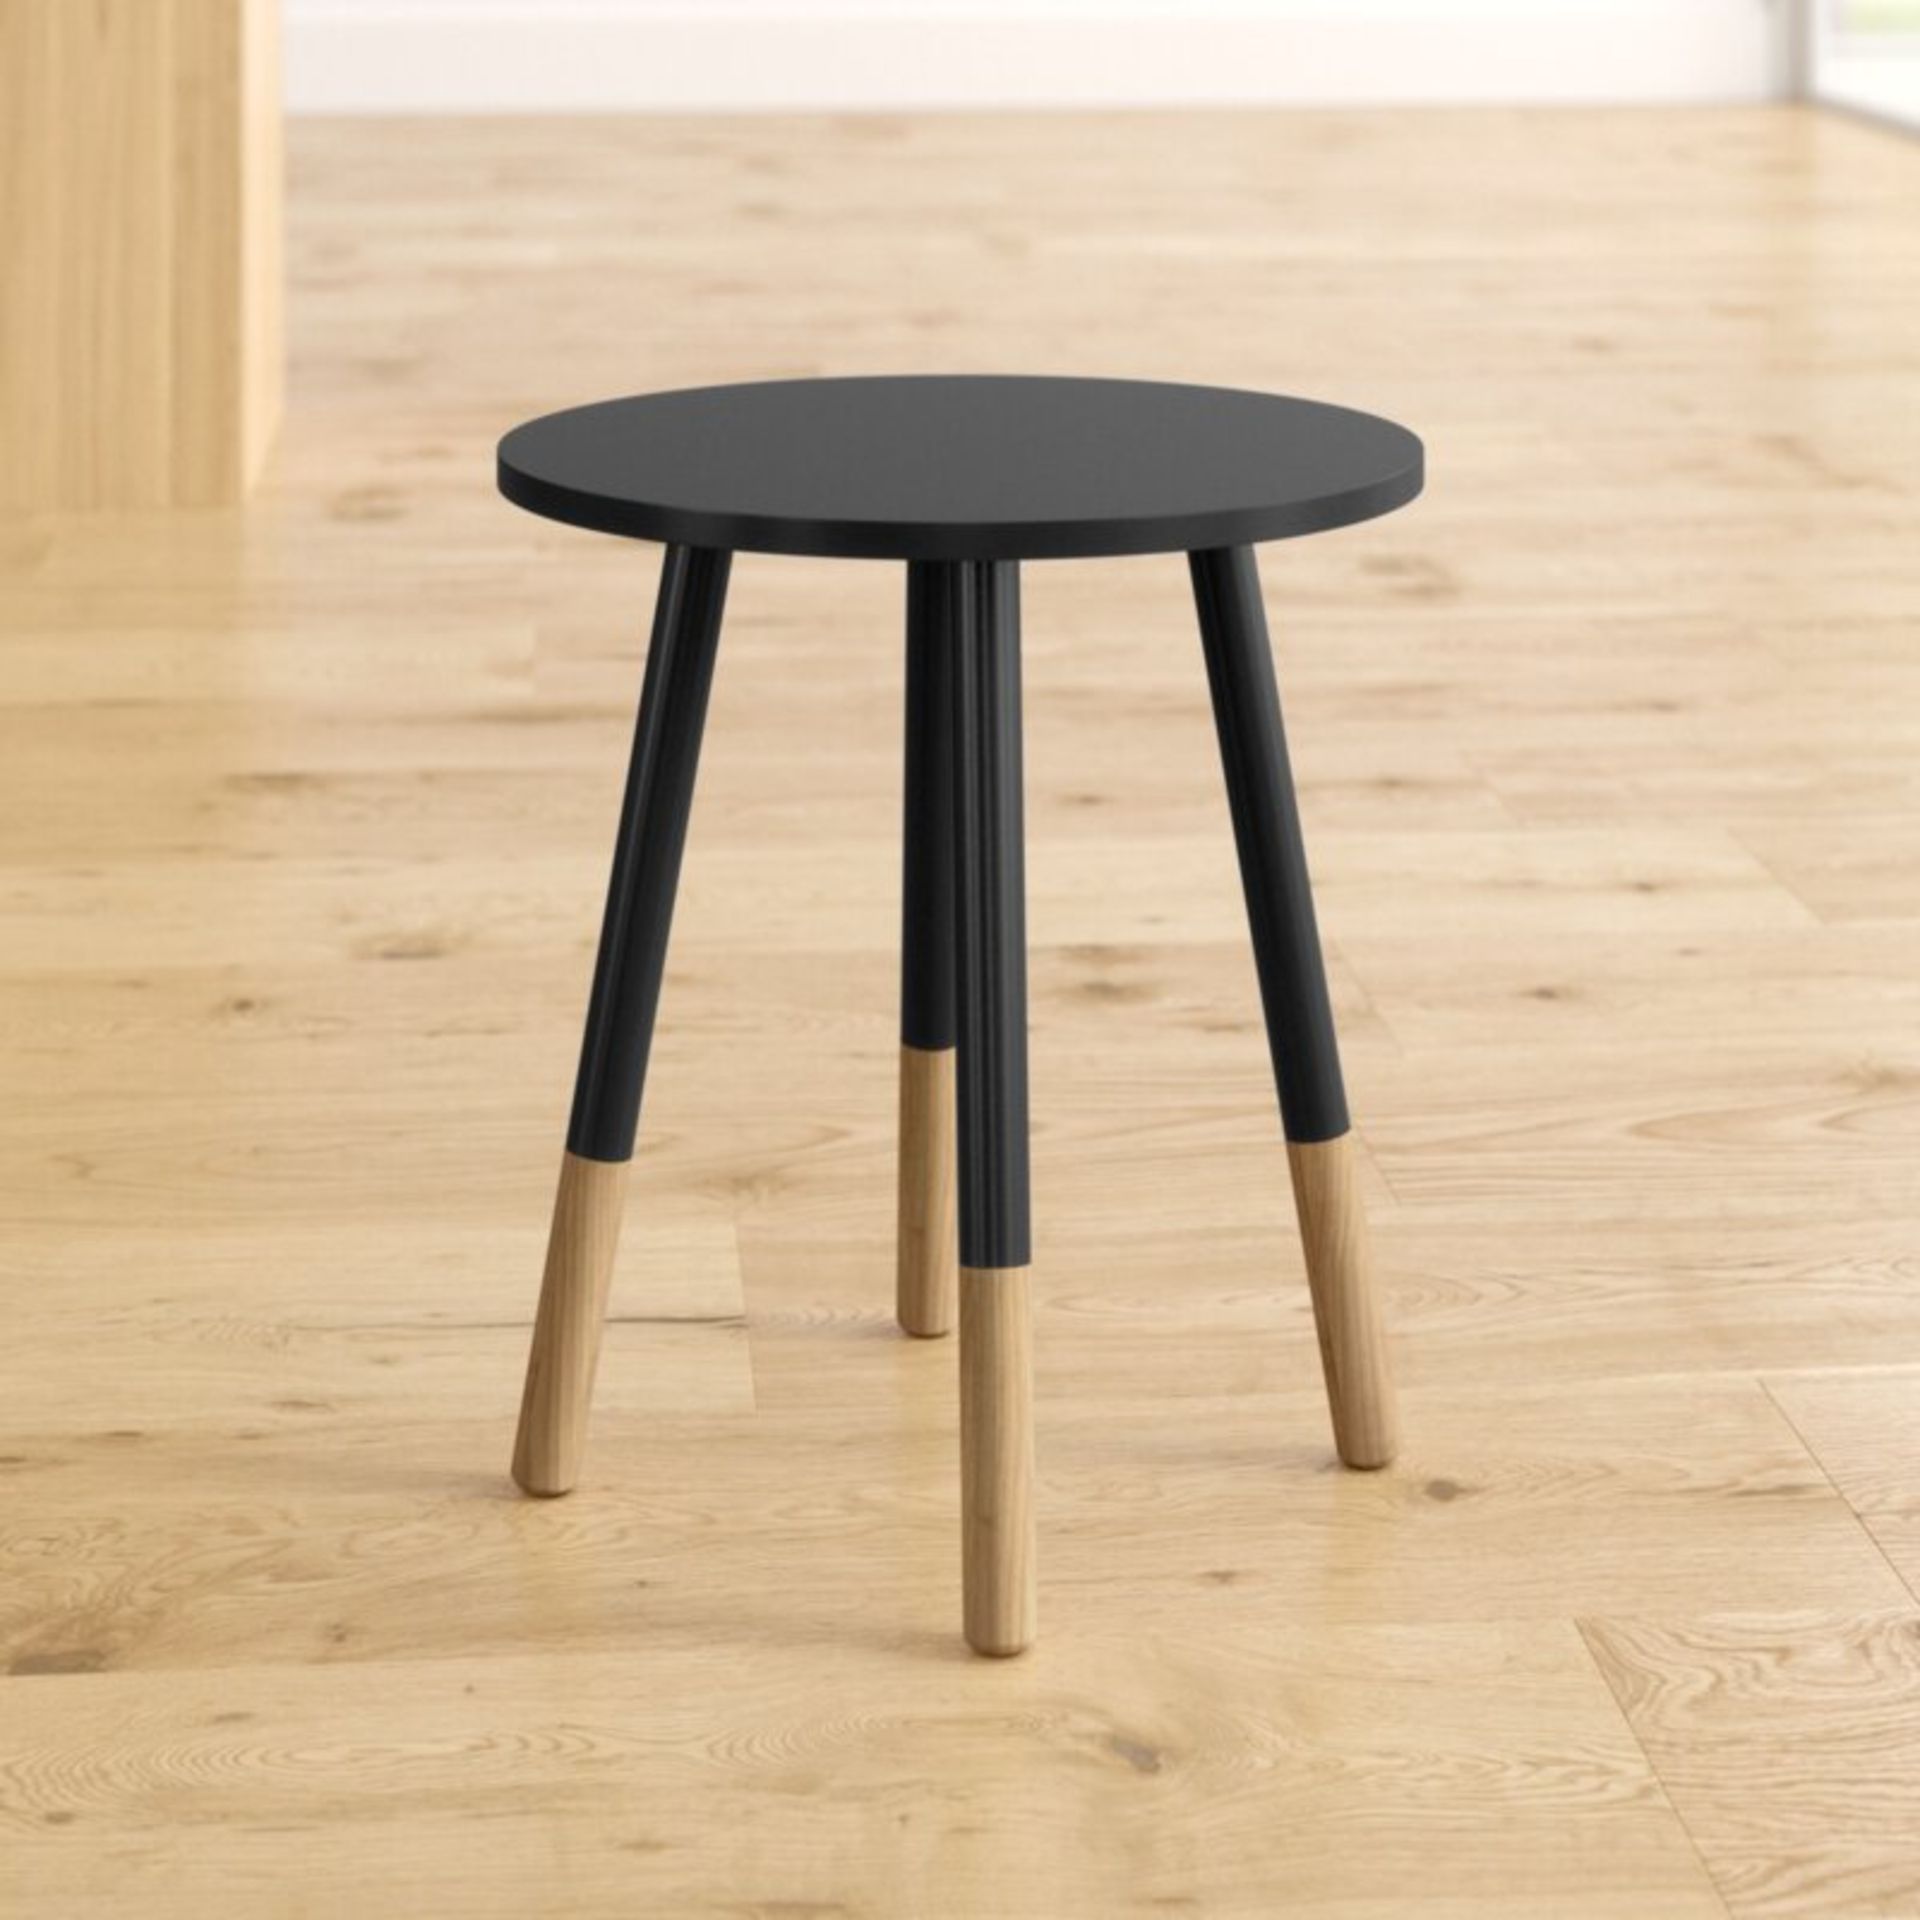 Amiya Side Table - RRP £42.99. - Image 4 of 4